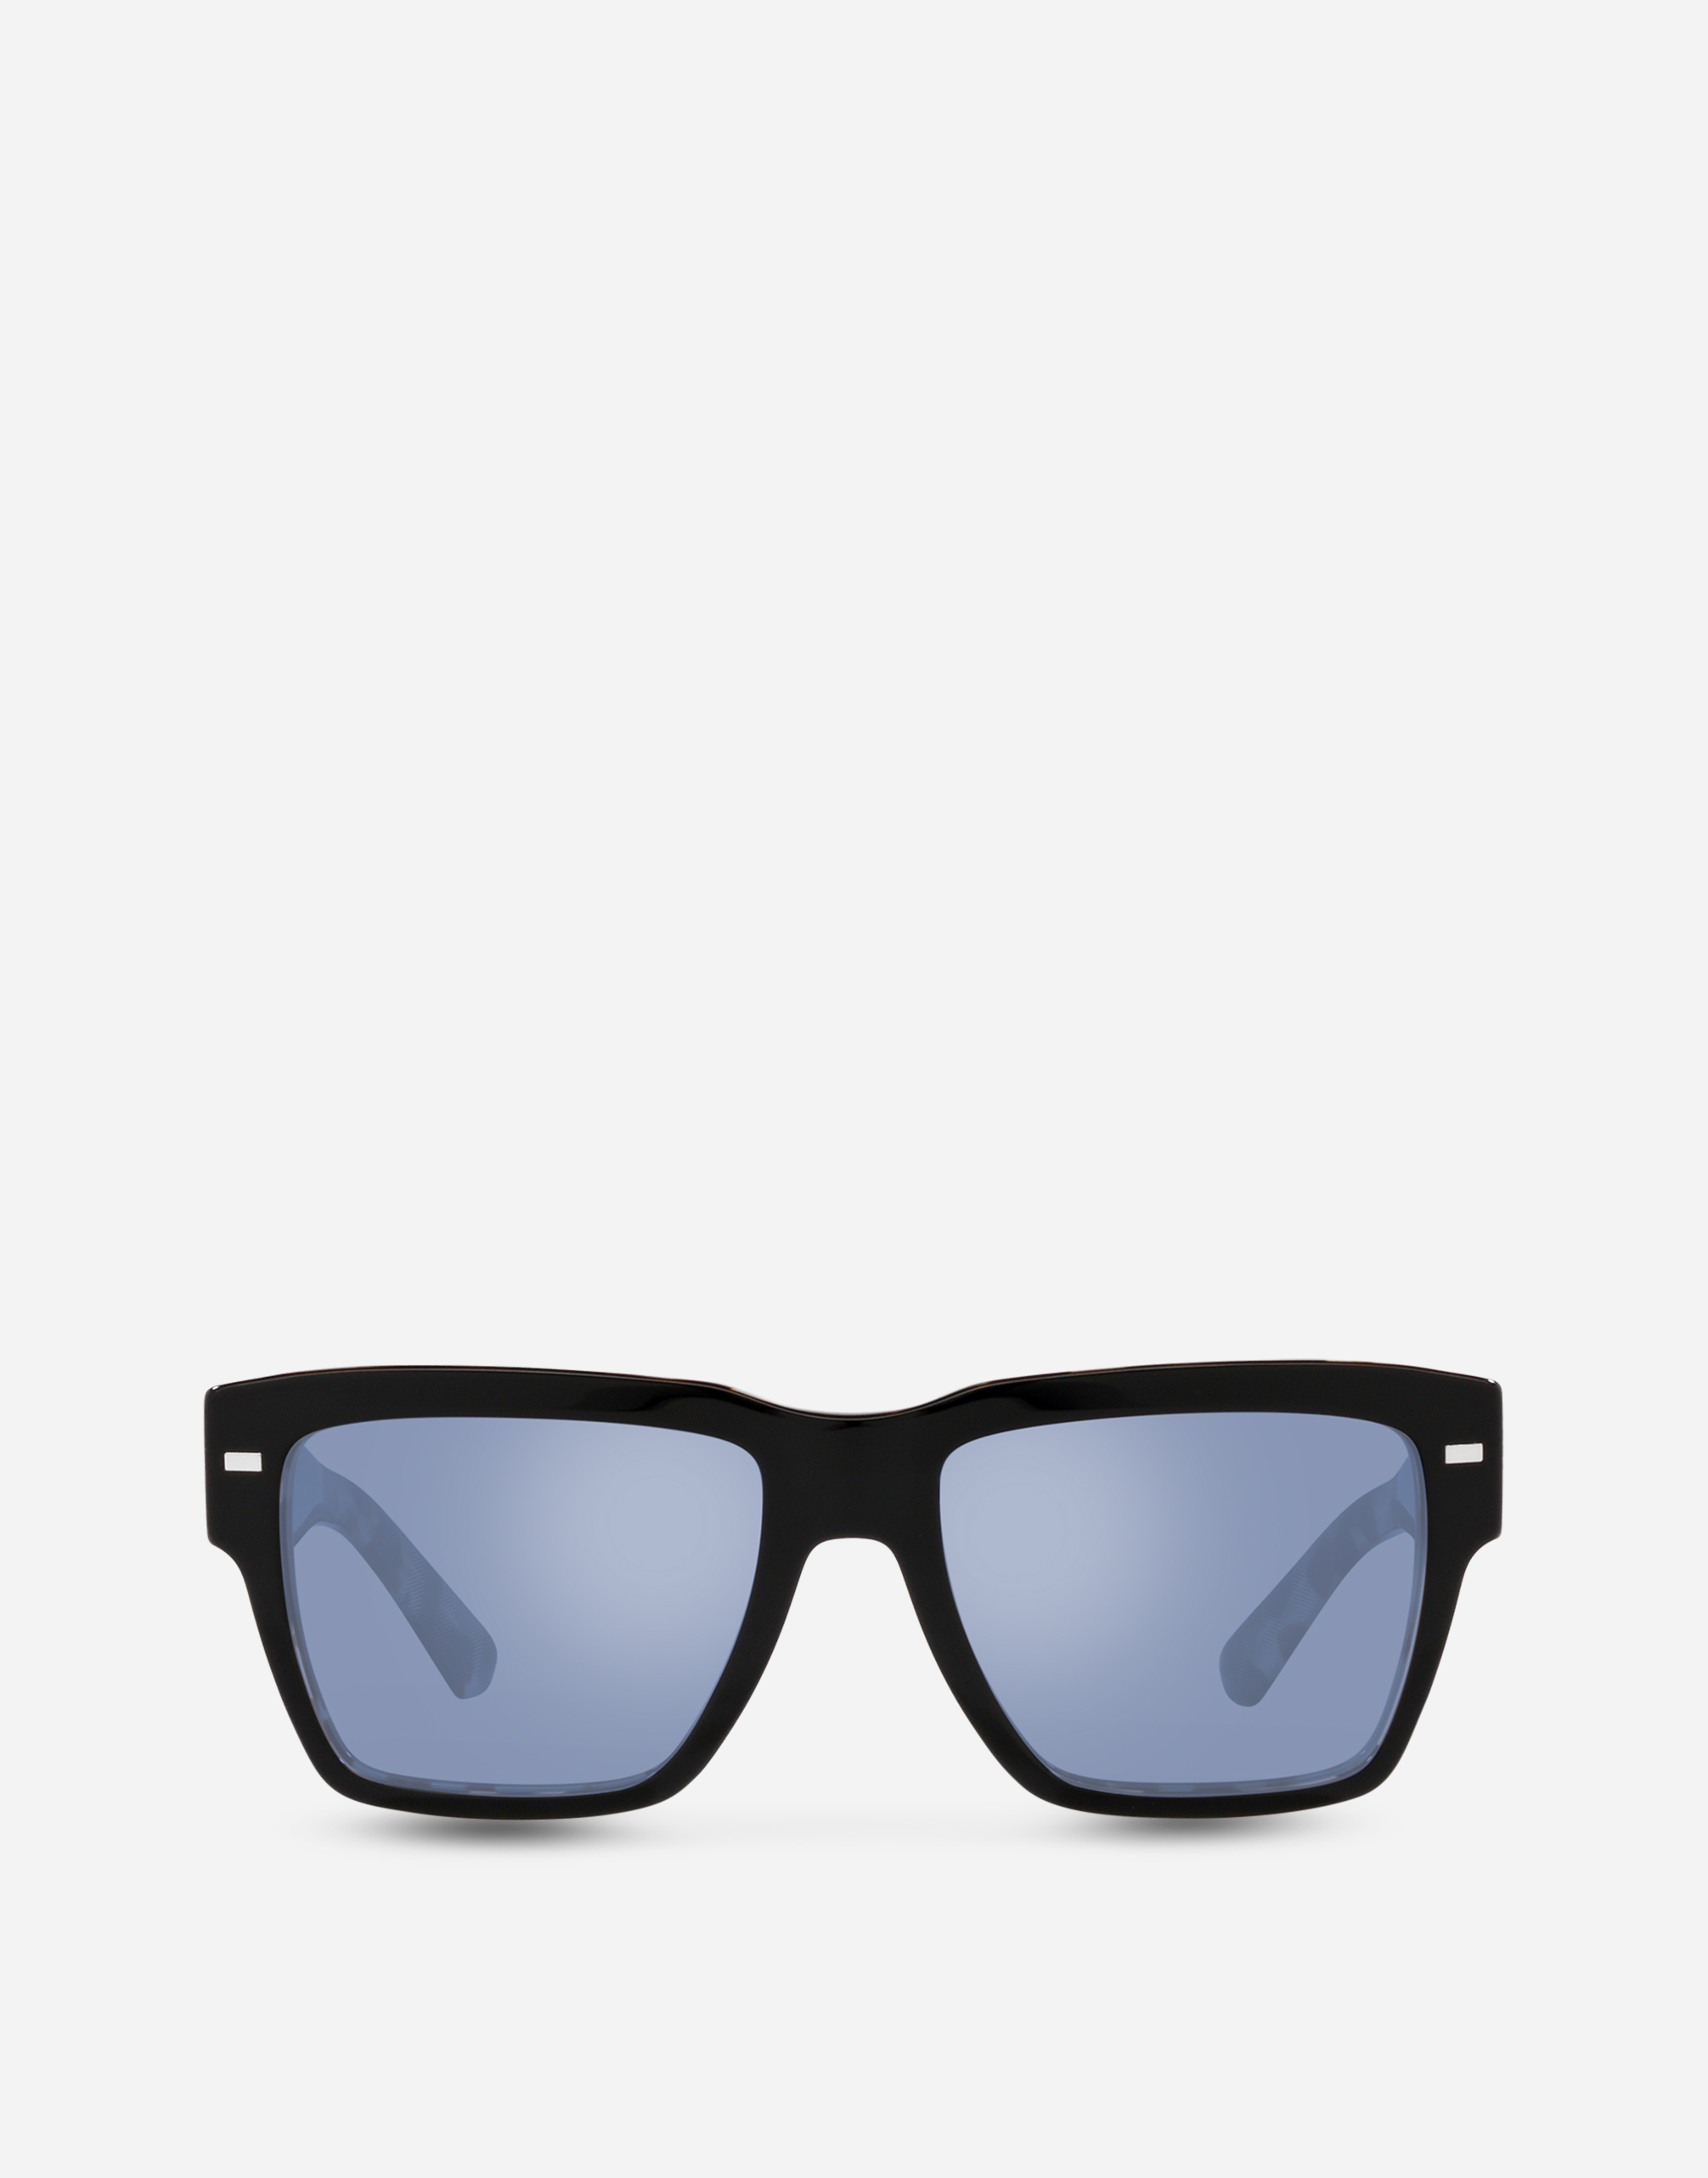 Lusso Sartoriale Sunglasses in Black on grey havana